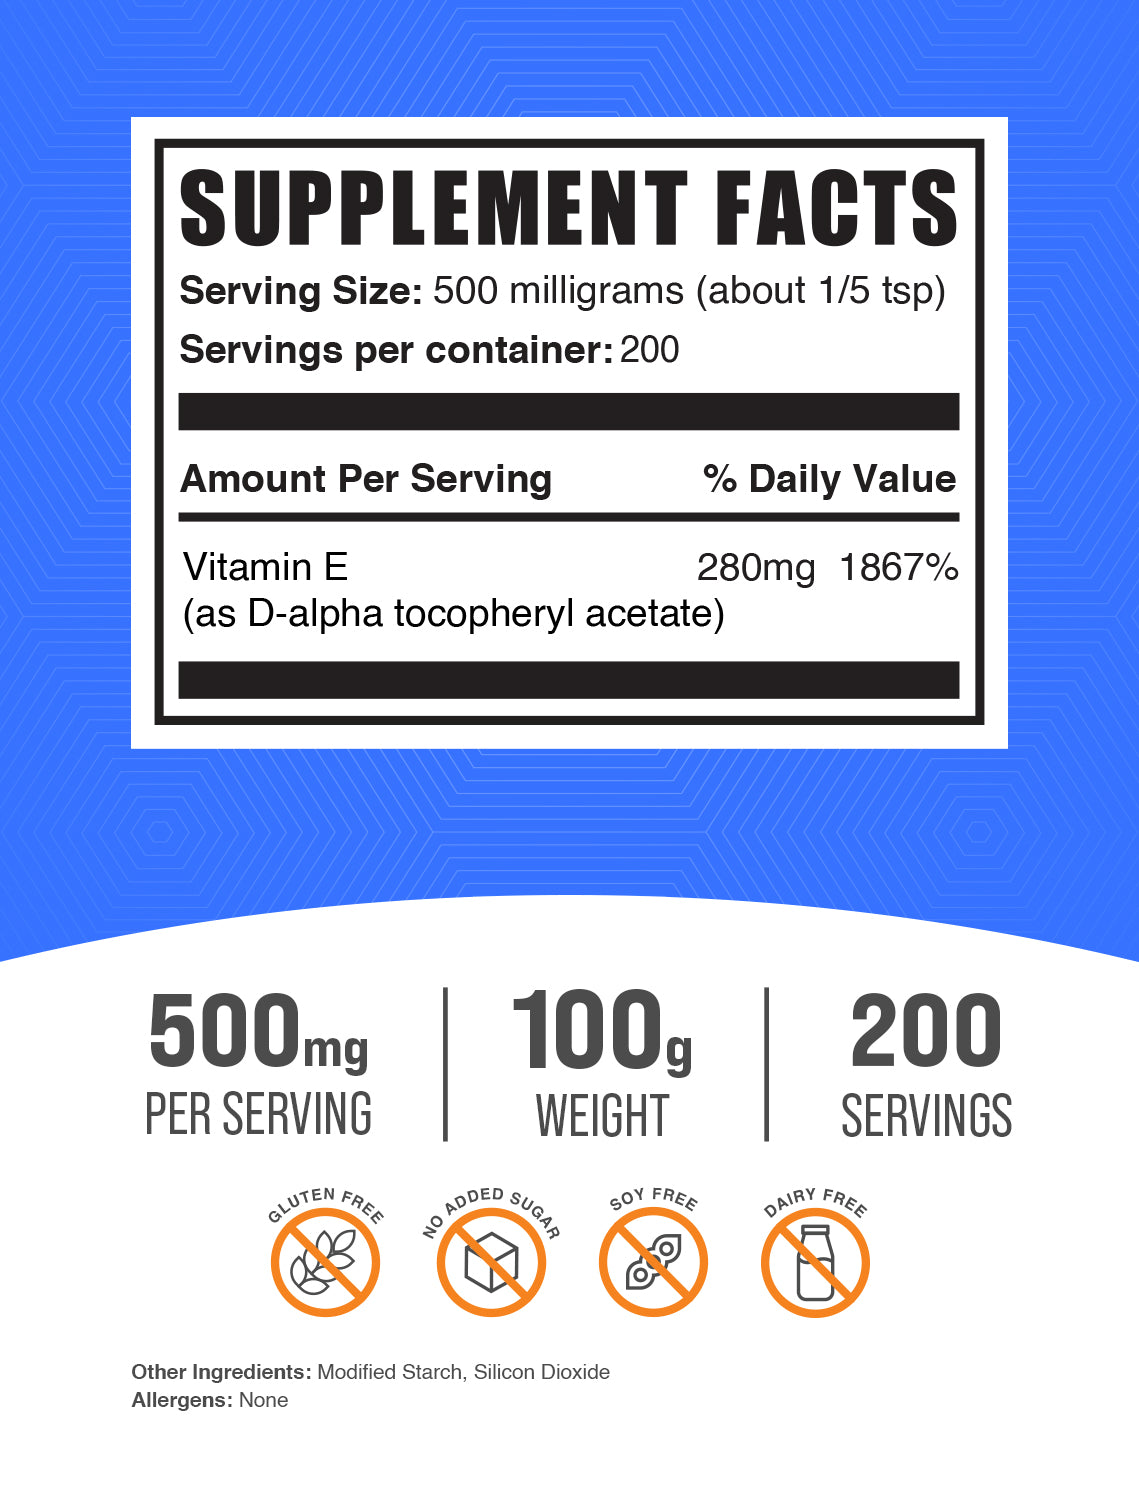 Vitamin E powder label 100g